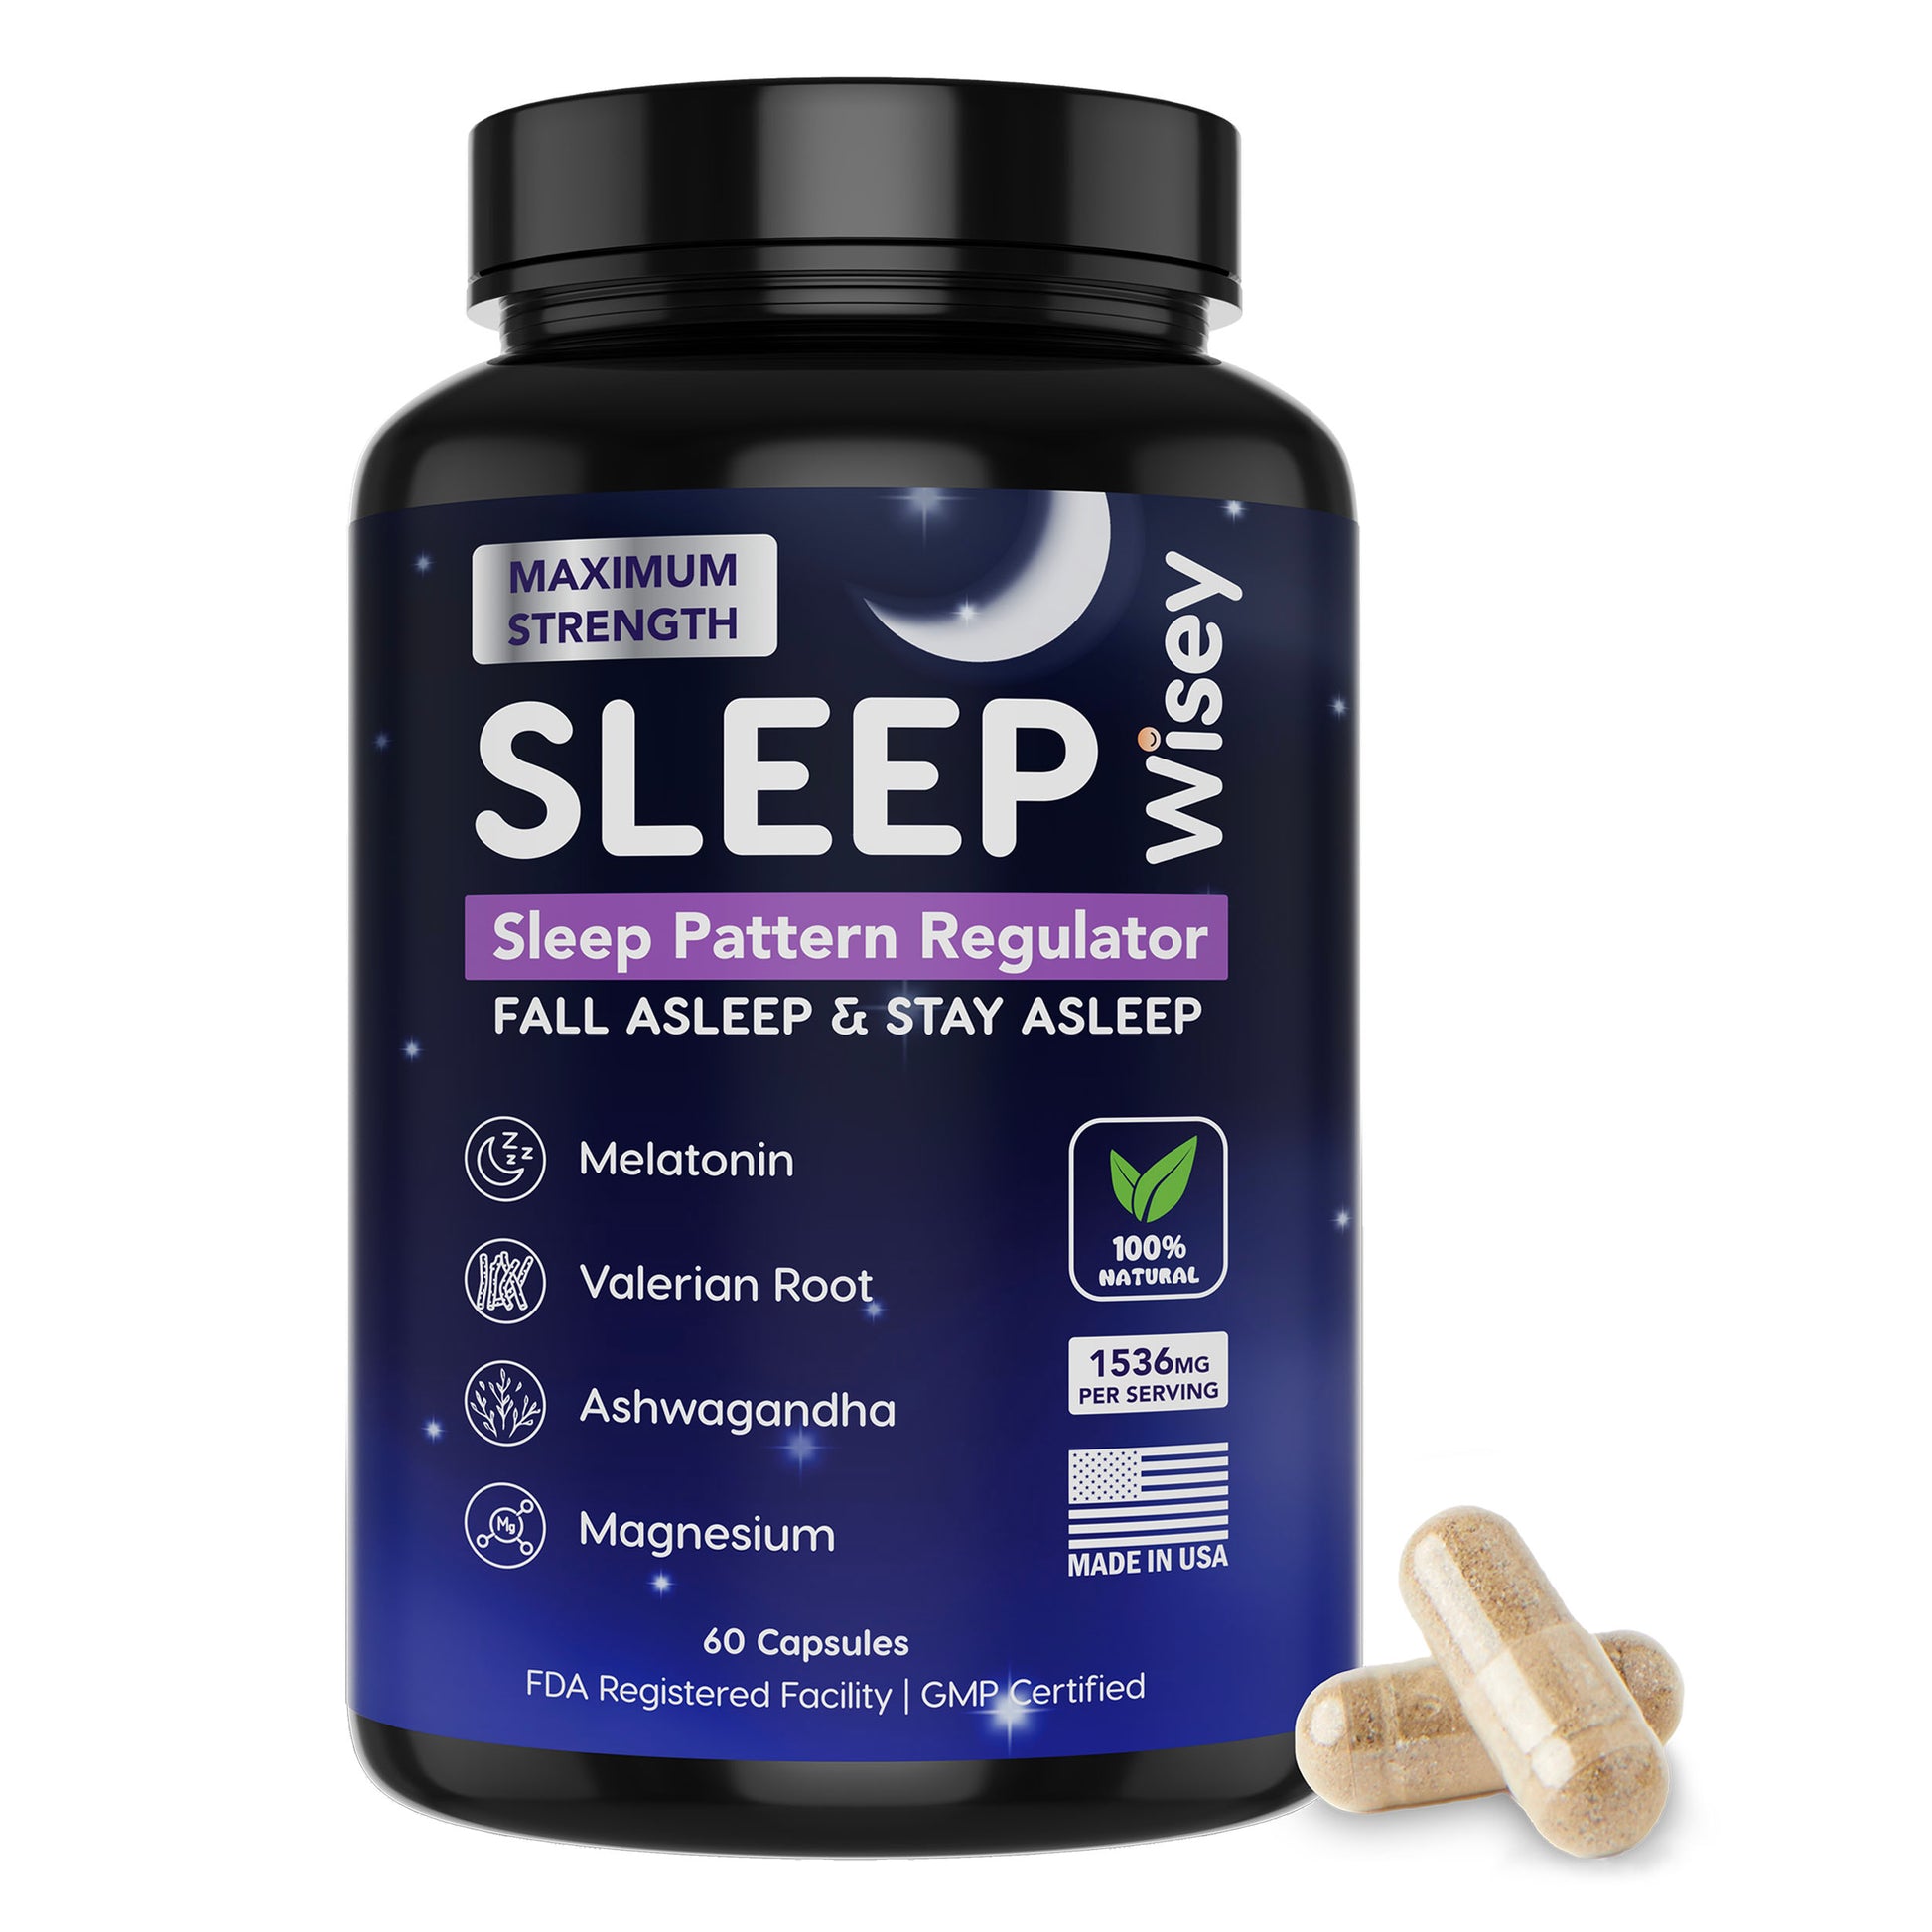 Wisey Natural Sleep Aid - Wisey